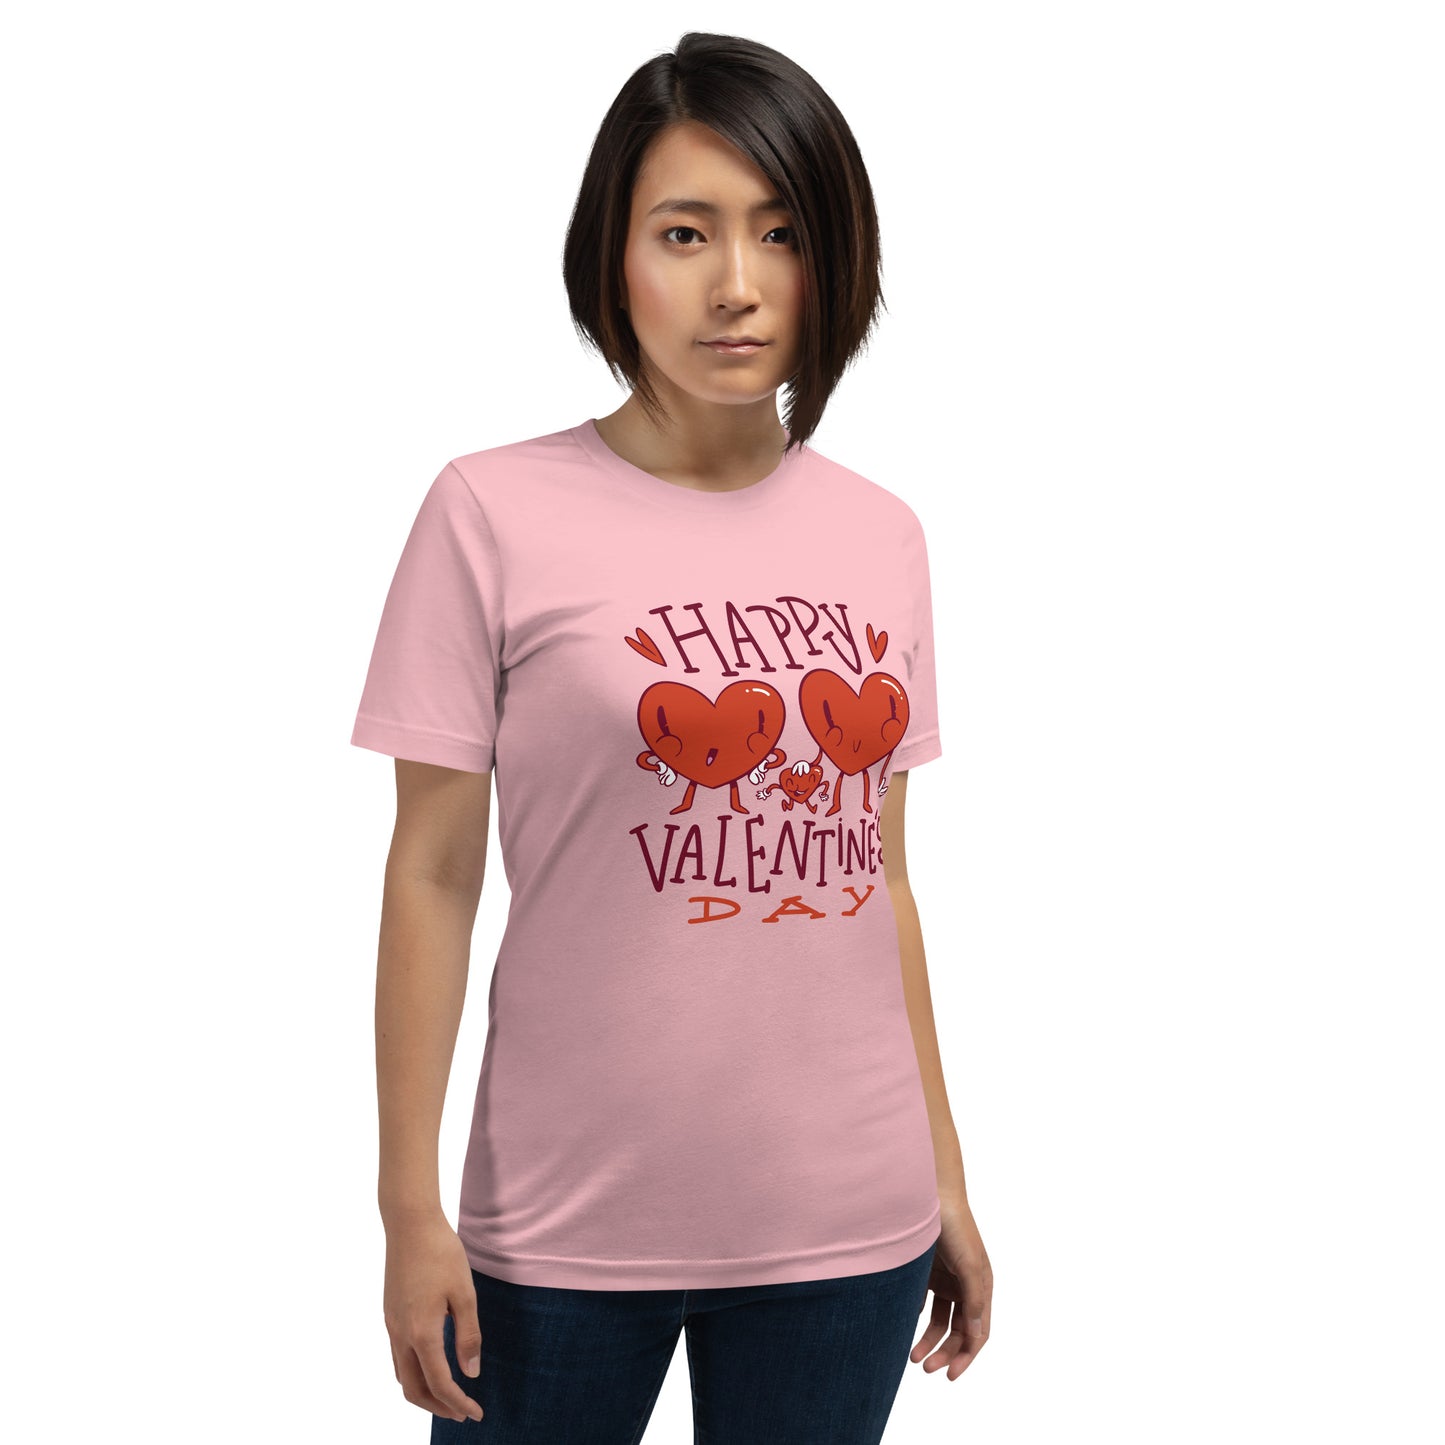 Women T Shirt - Happy Valentine's Day (Glamourange Motivation Staple T-Shirts - Front Print)